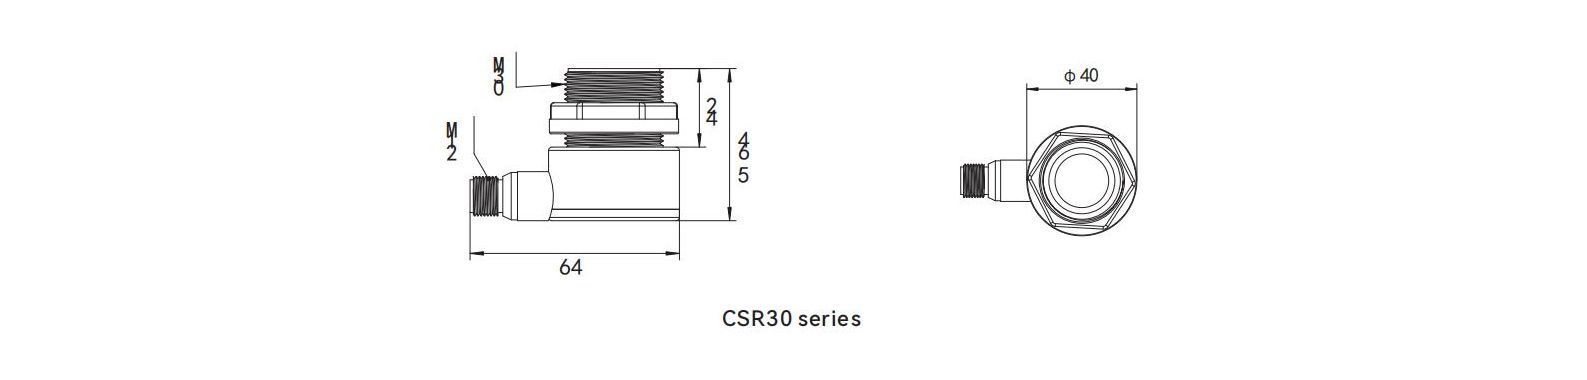 Ultrasonic sensors CSR30 series Dimensions